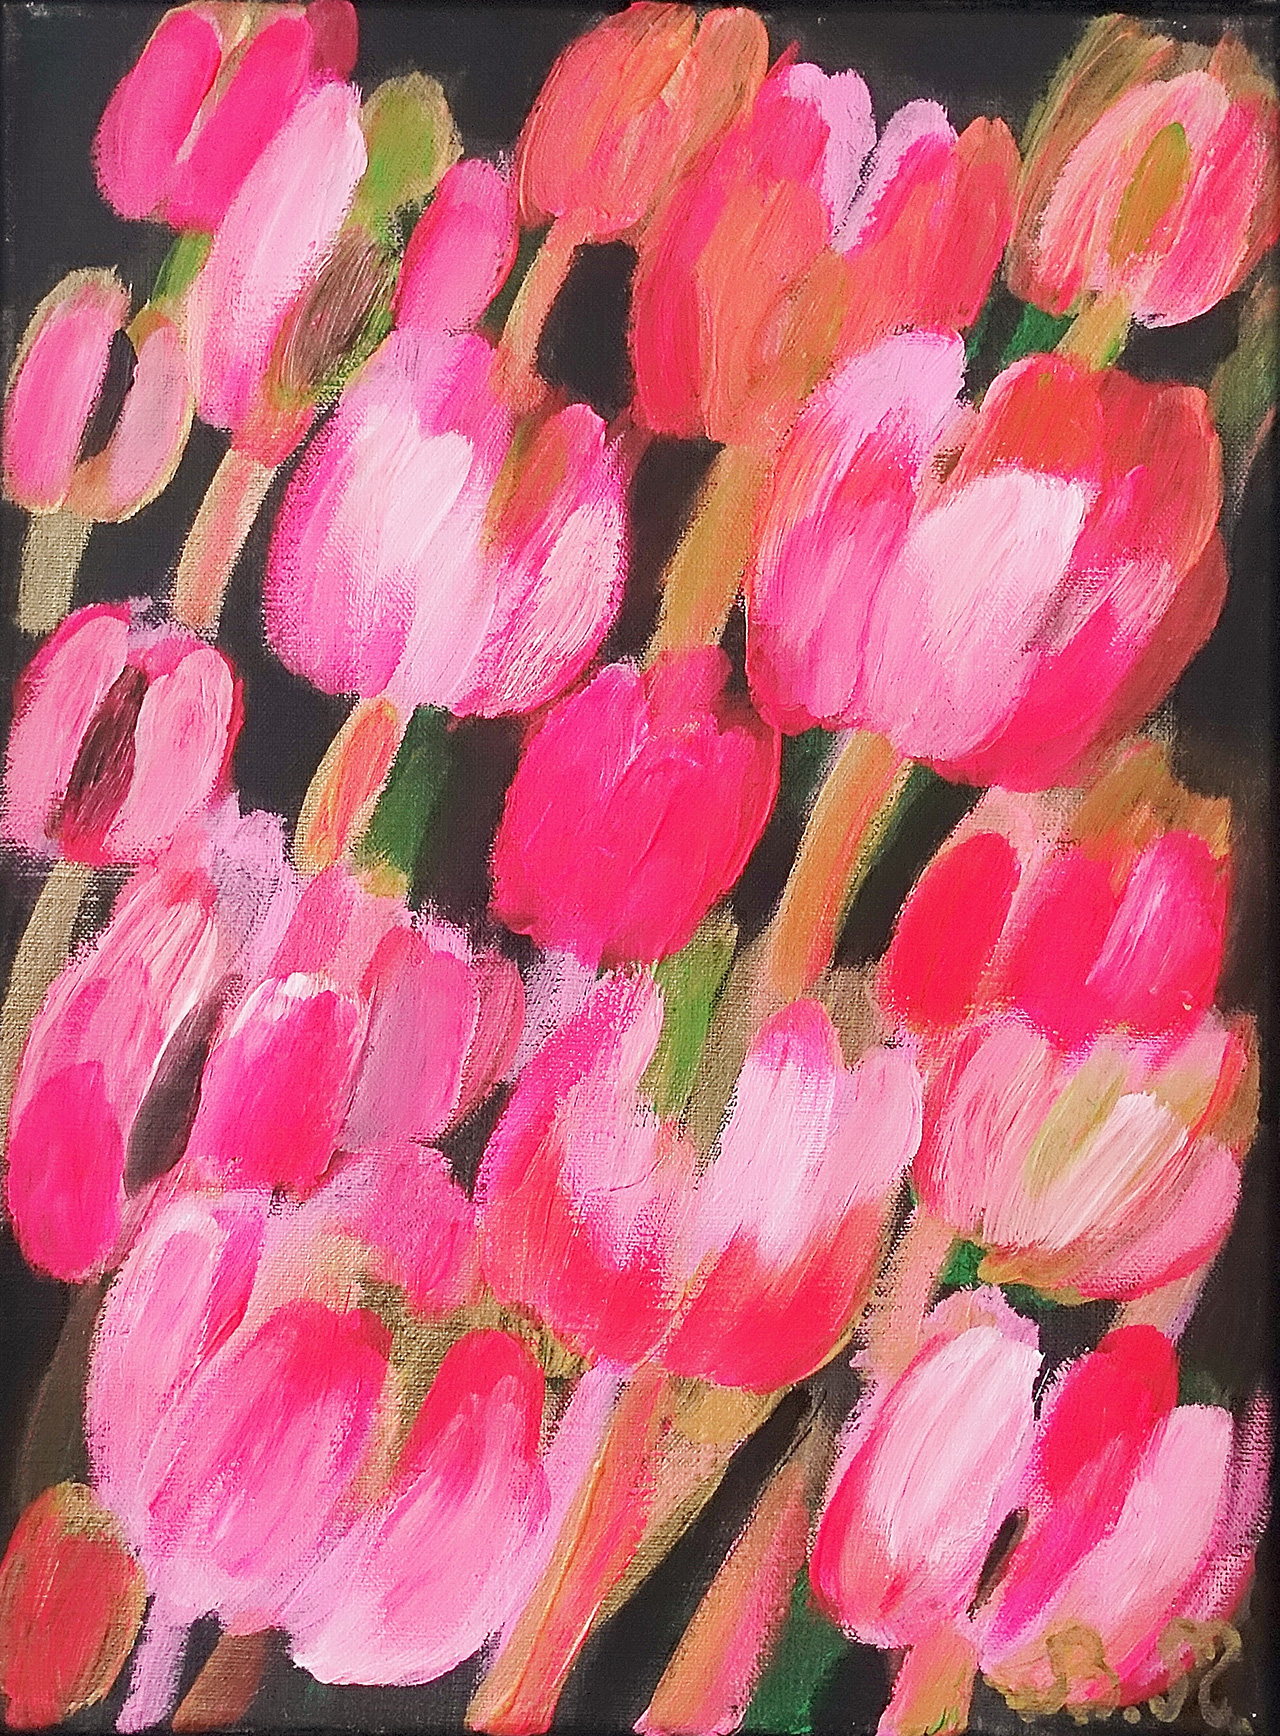 Beata Murawska - Psychodelic tulips (Oil on Canvas | Size: 36 x 46 cm | Price: 3000 PLN)